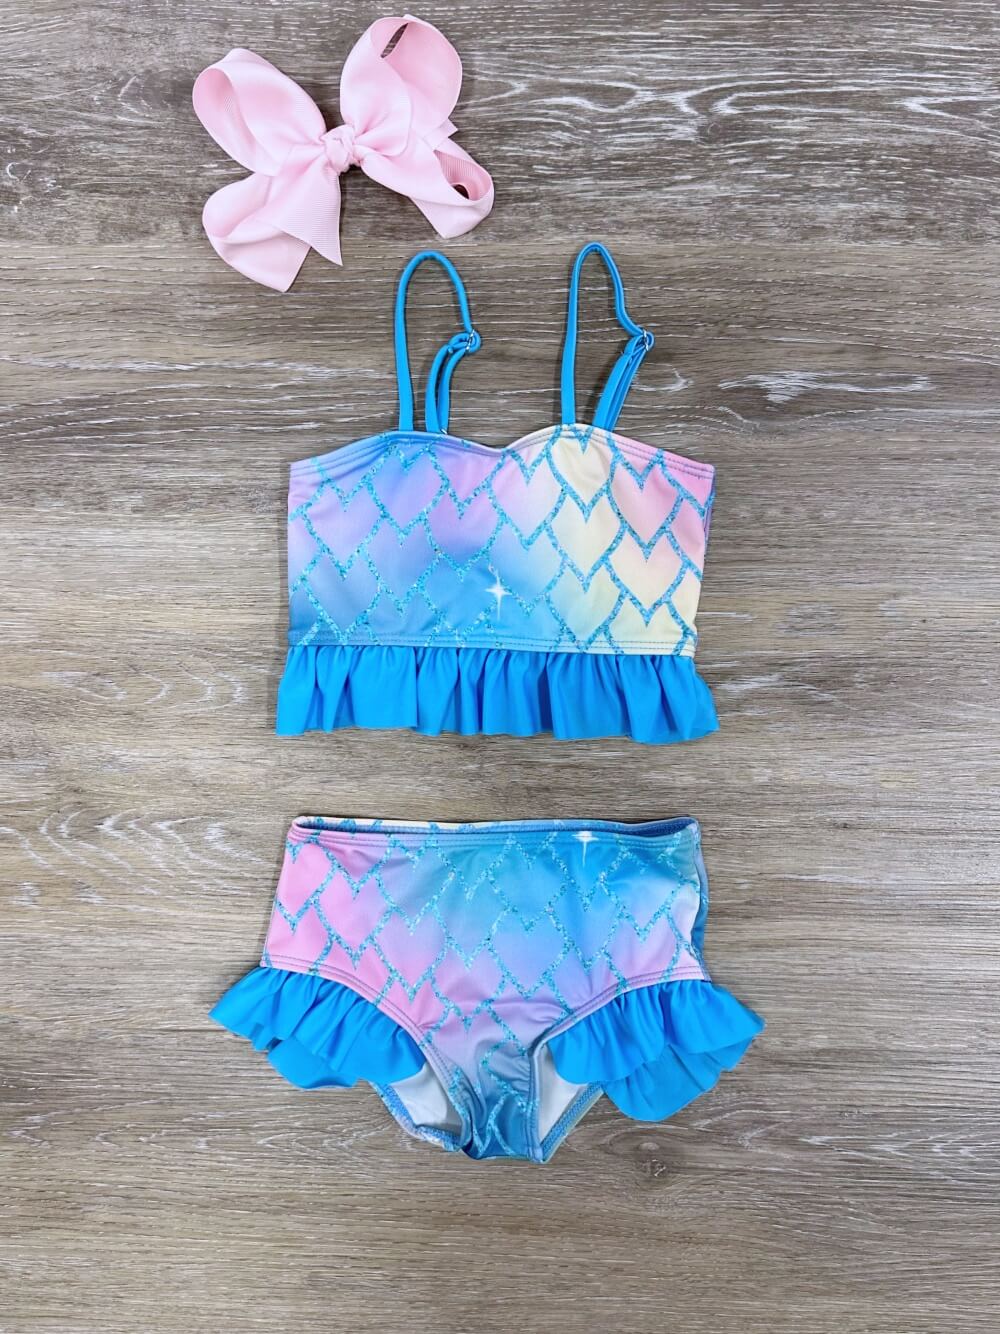 Mermazing Blue Ruffle Girls 2 Piece Tankini Swimsuit